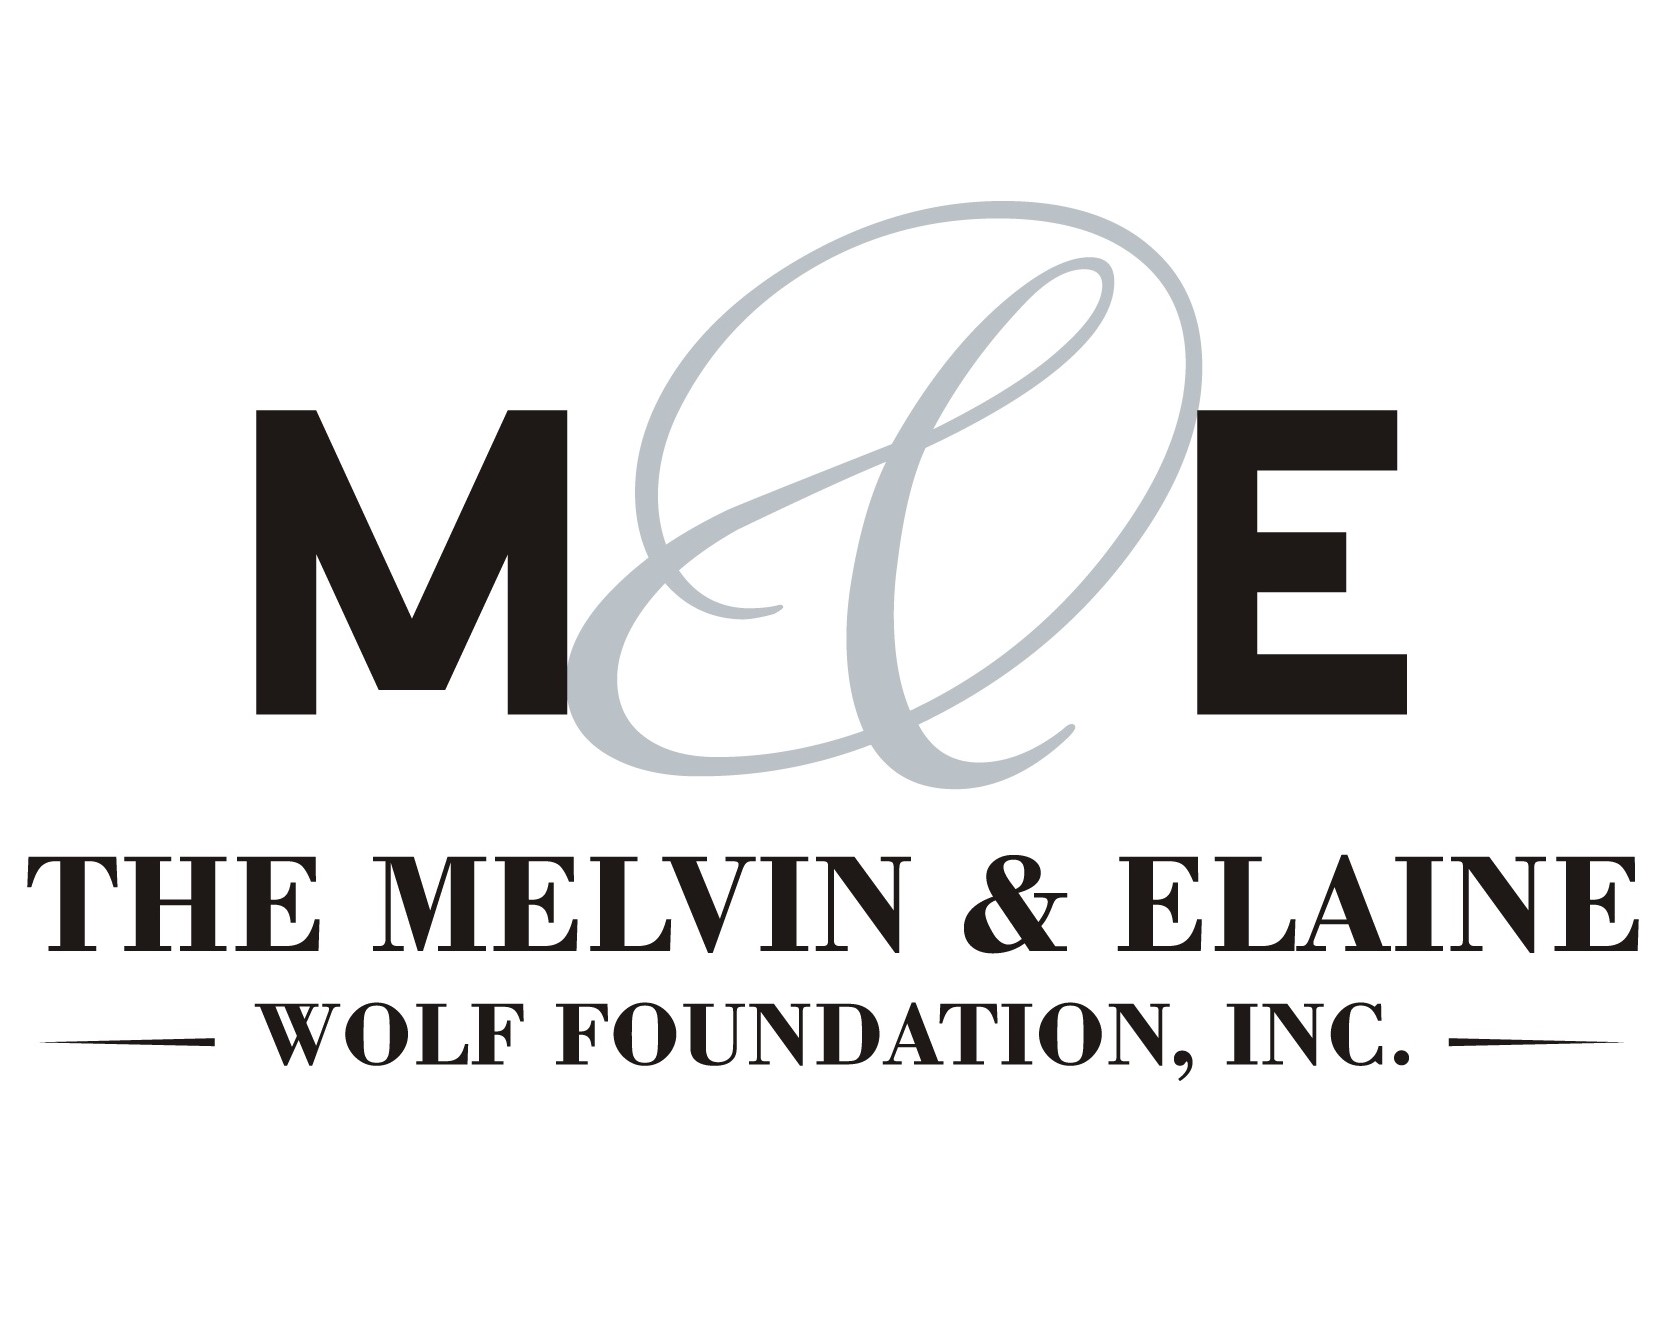 The Melvin & Elaine Wolf Foundation